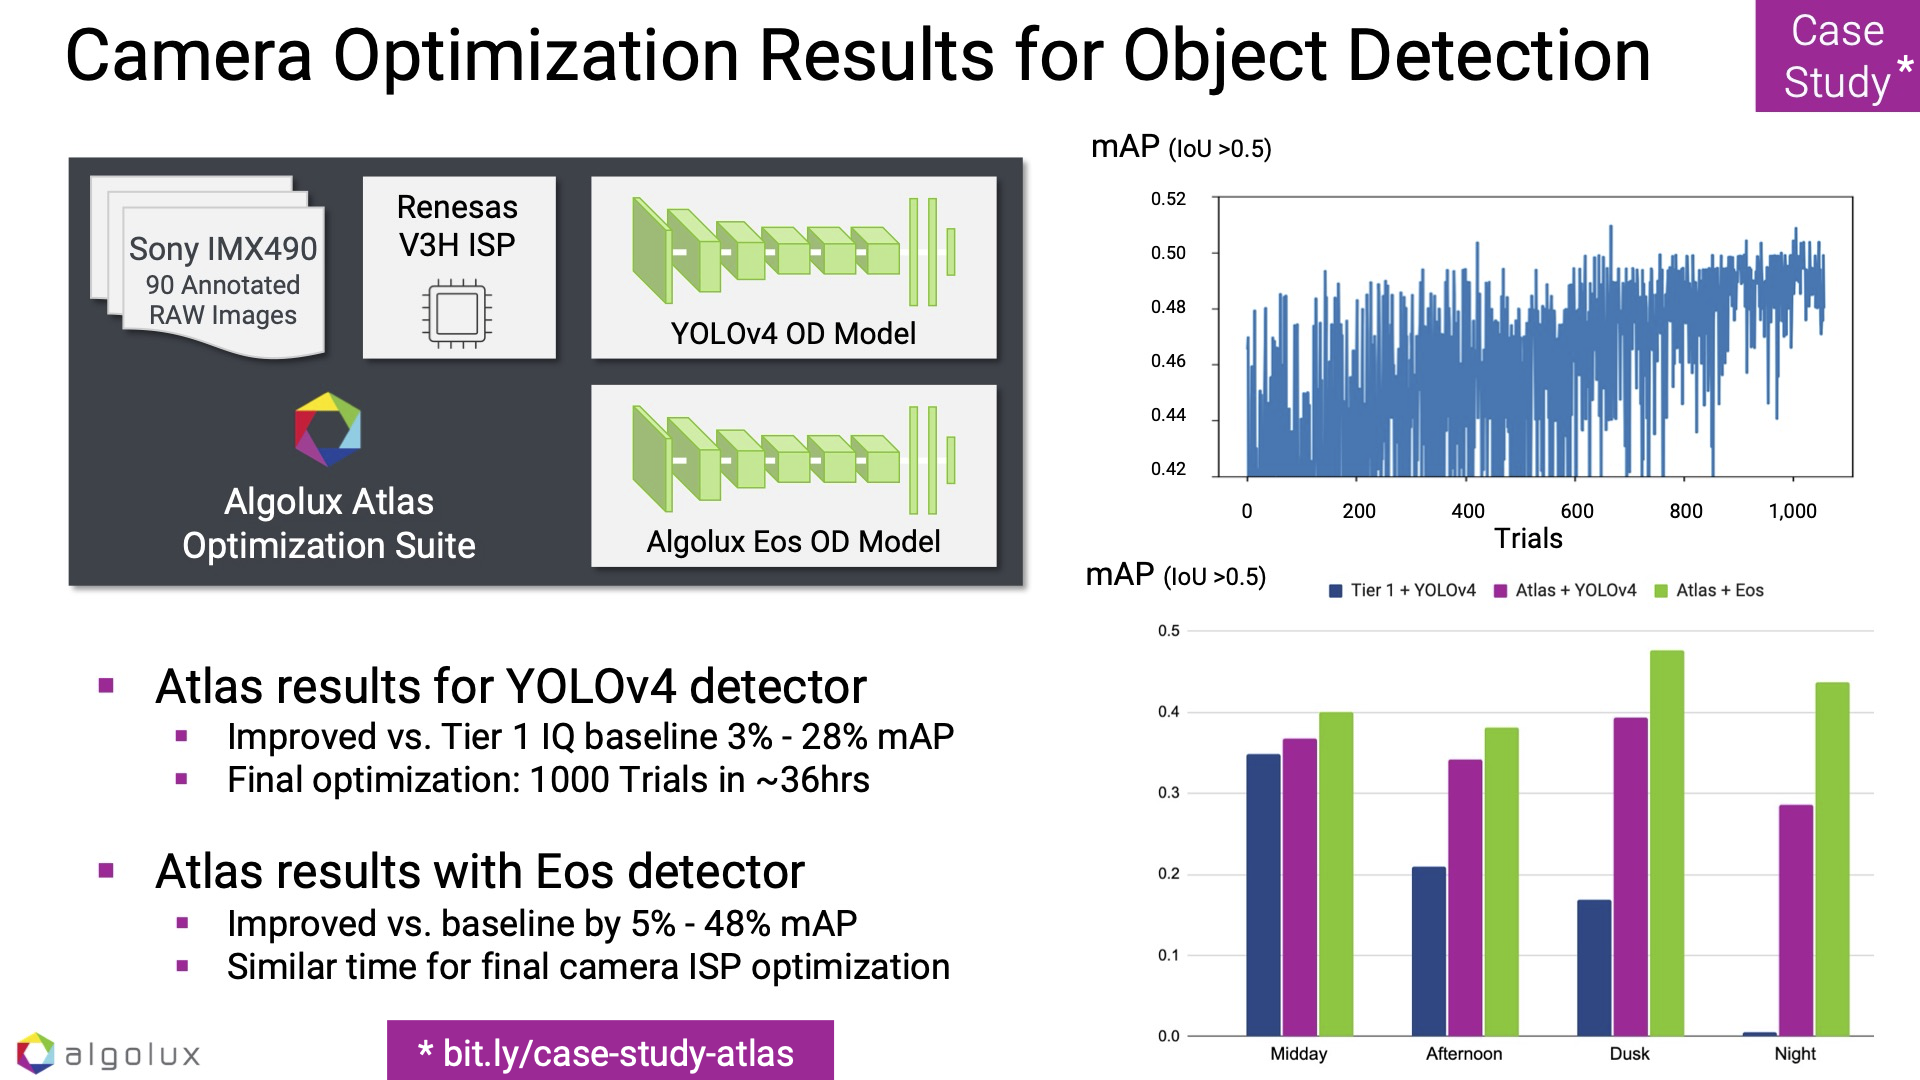 Algolux Atlas Camera Optimization Suite - Camera Optimization Results for Object Detection (Case Study)